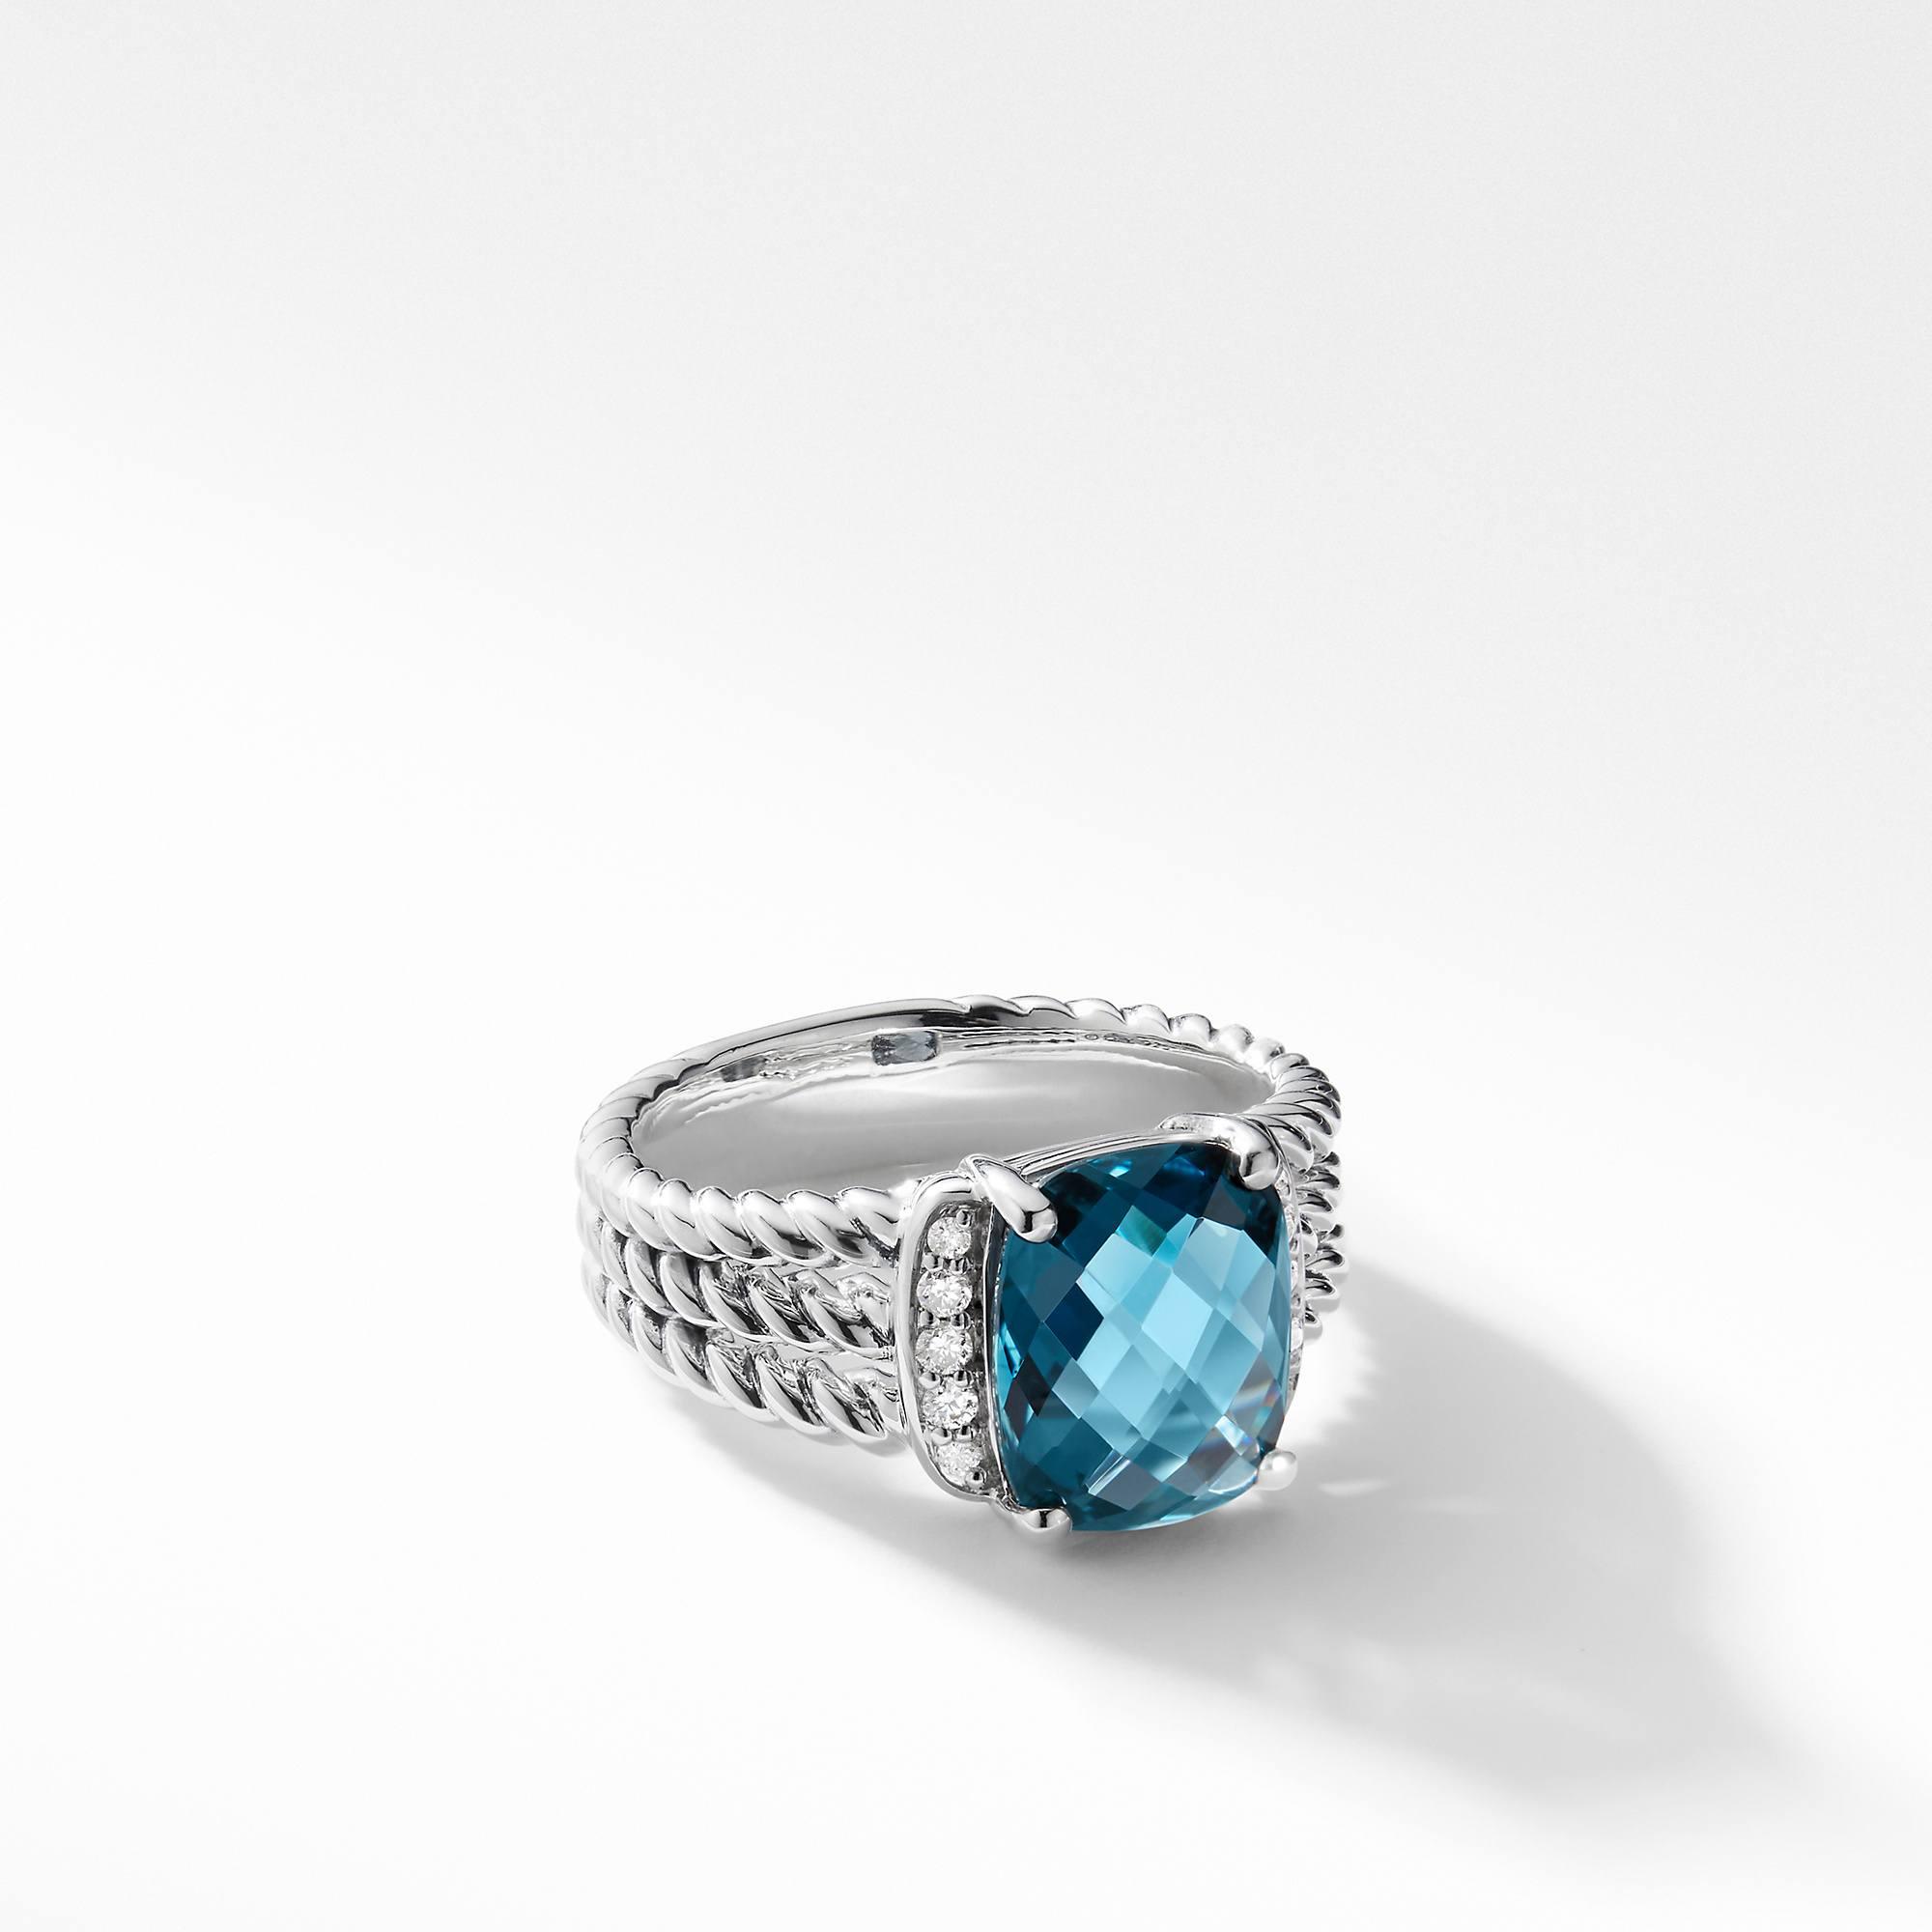 David Yurman Petite Wheaton Ring with Hampton Blue Topaz and Diamonds, size 7